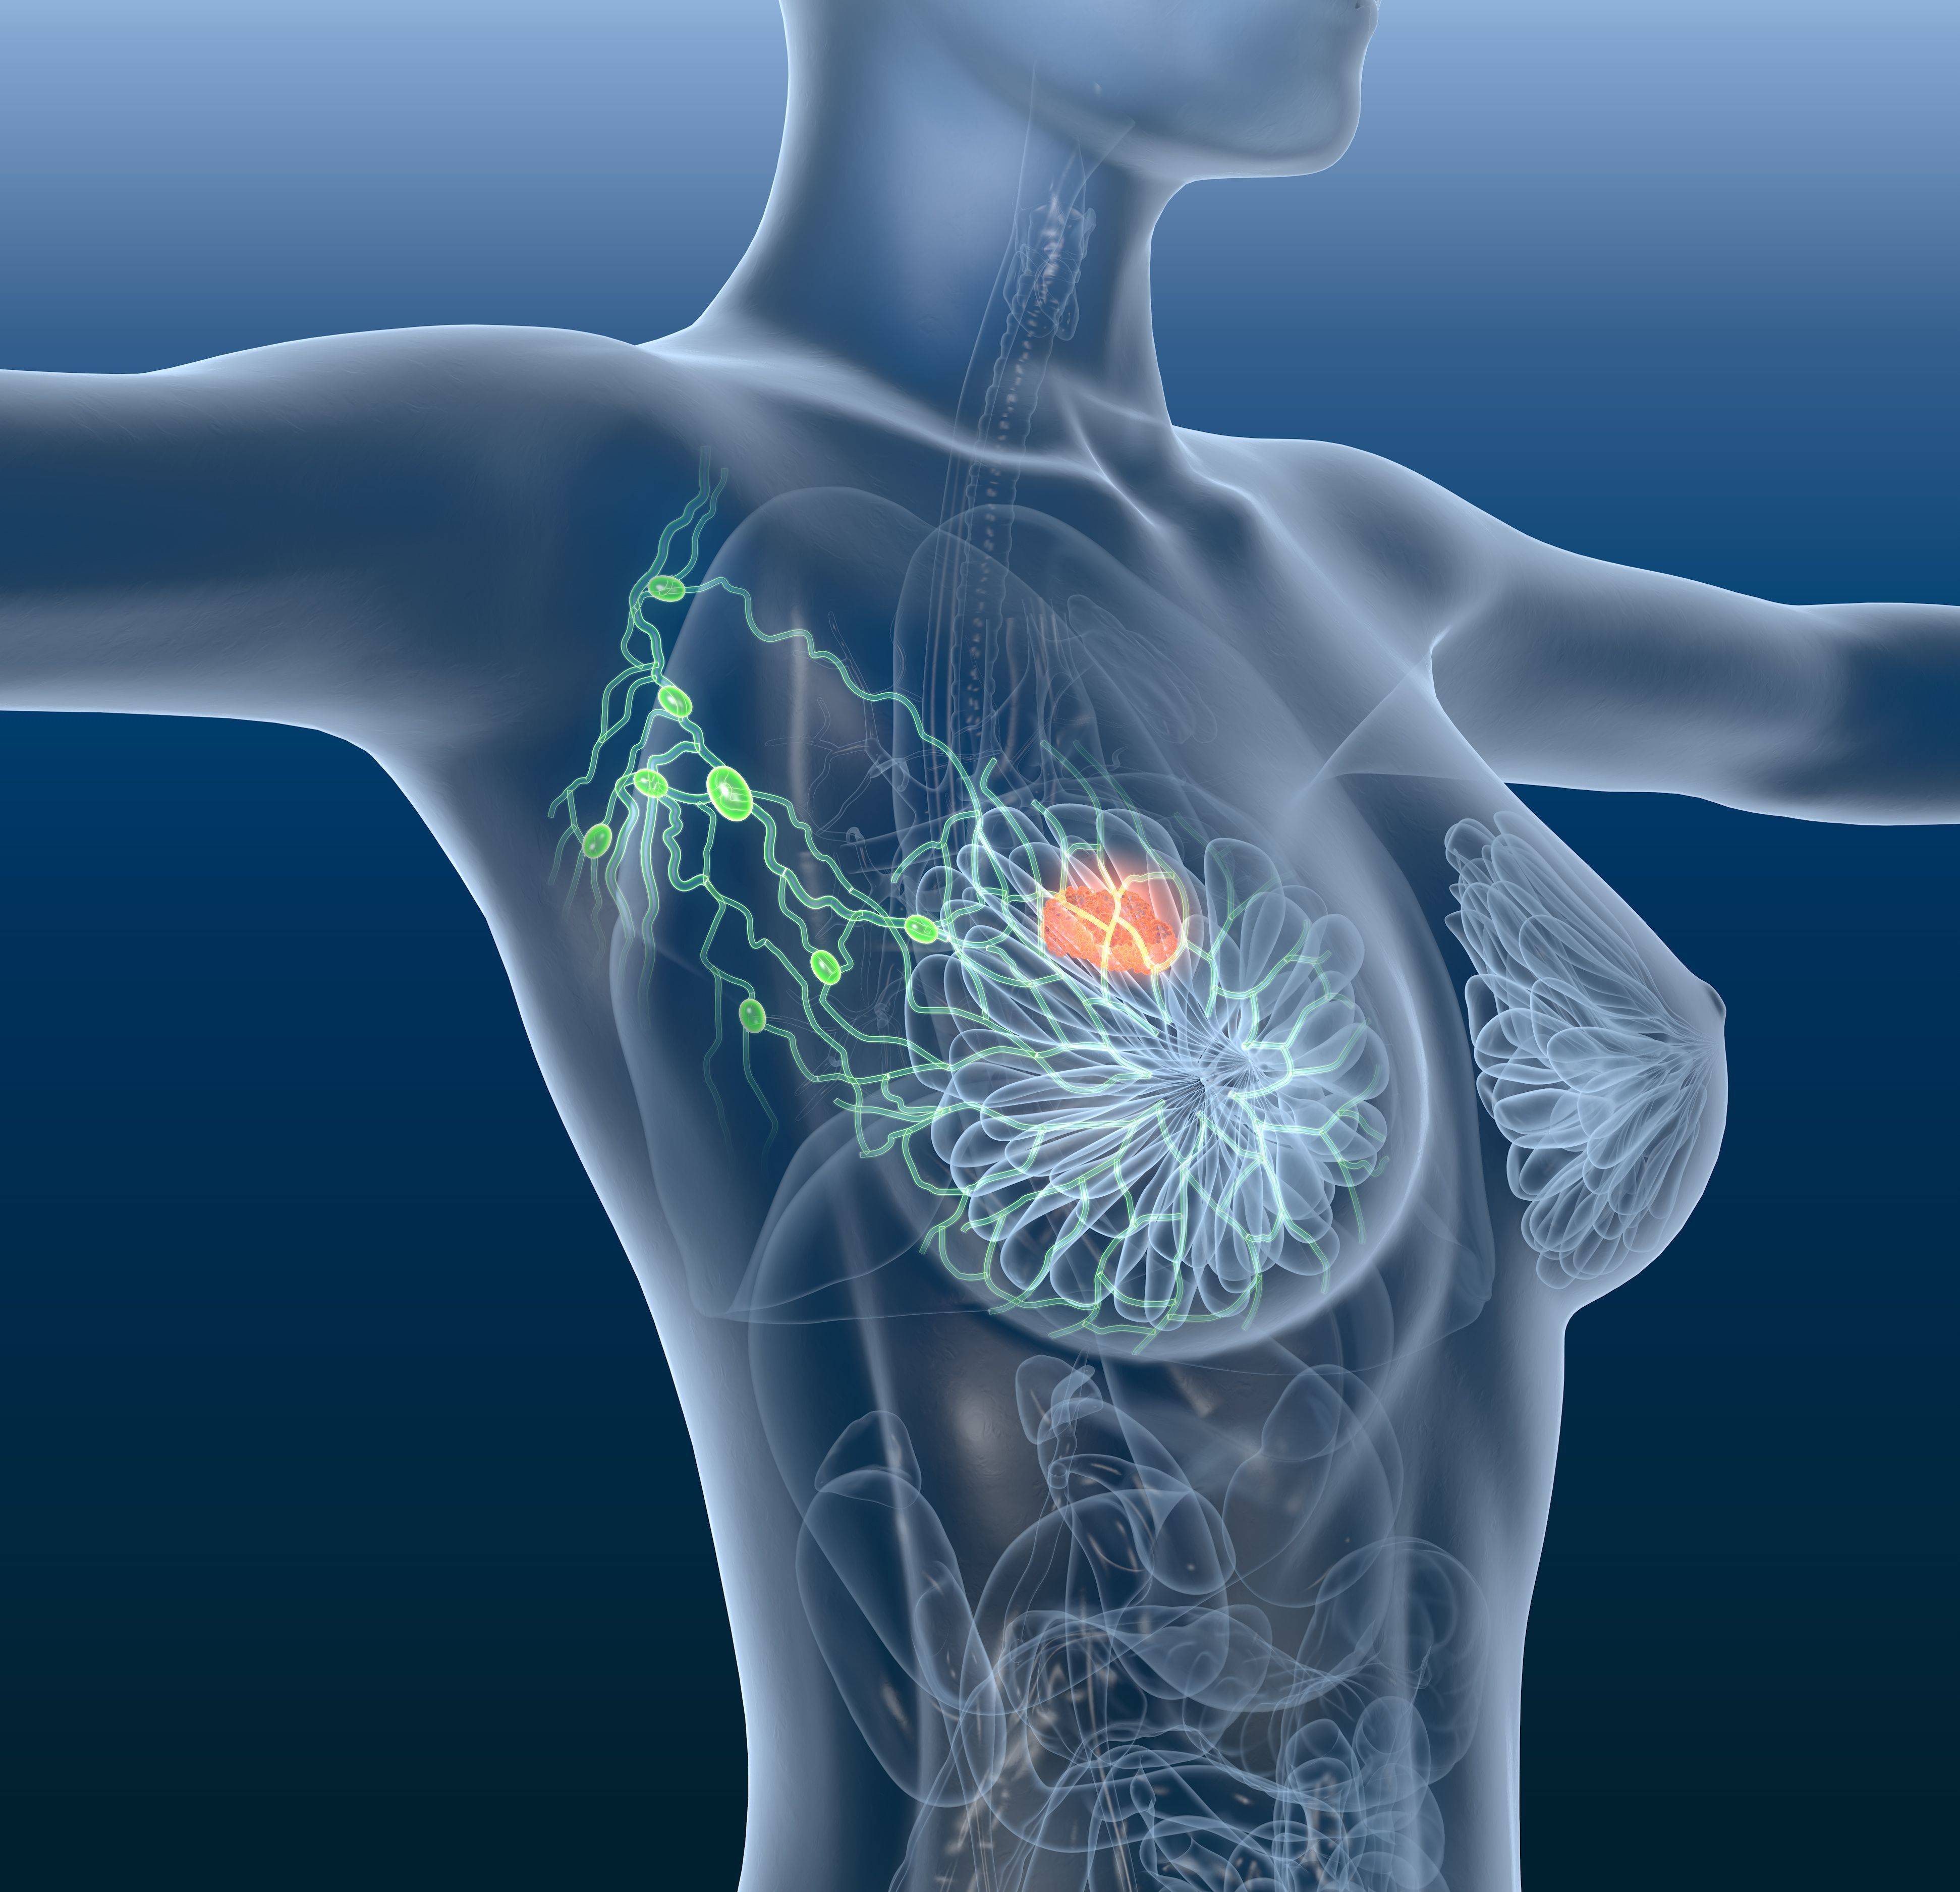 Hel on X: “@Factx9: Scientific Reasons Why Men Love Breasts http